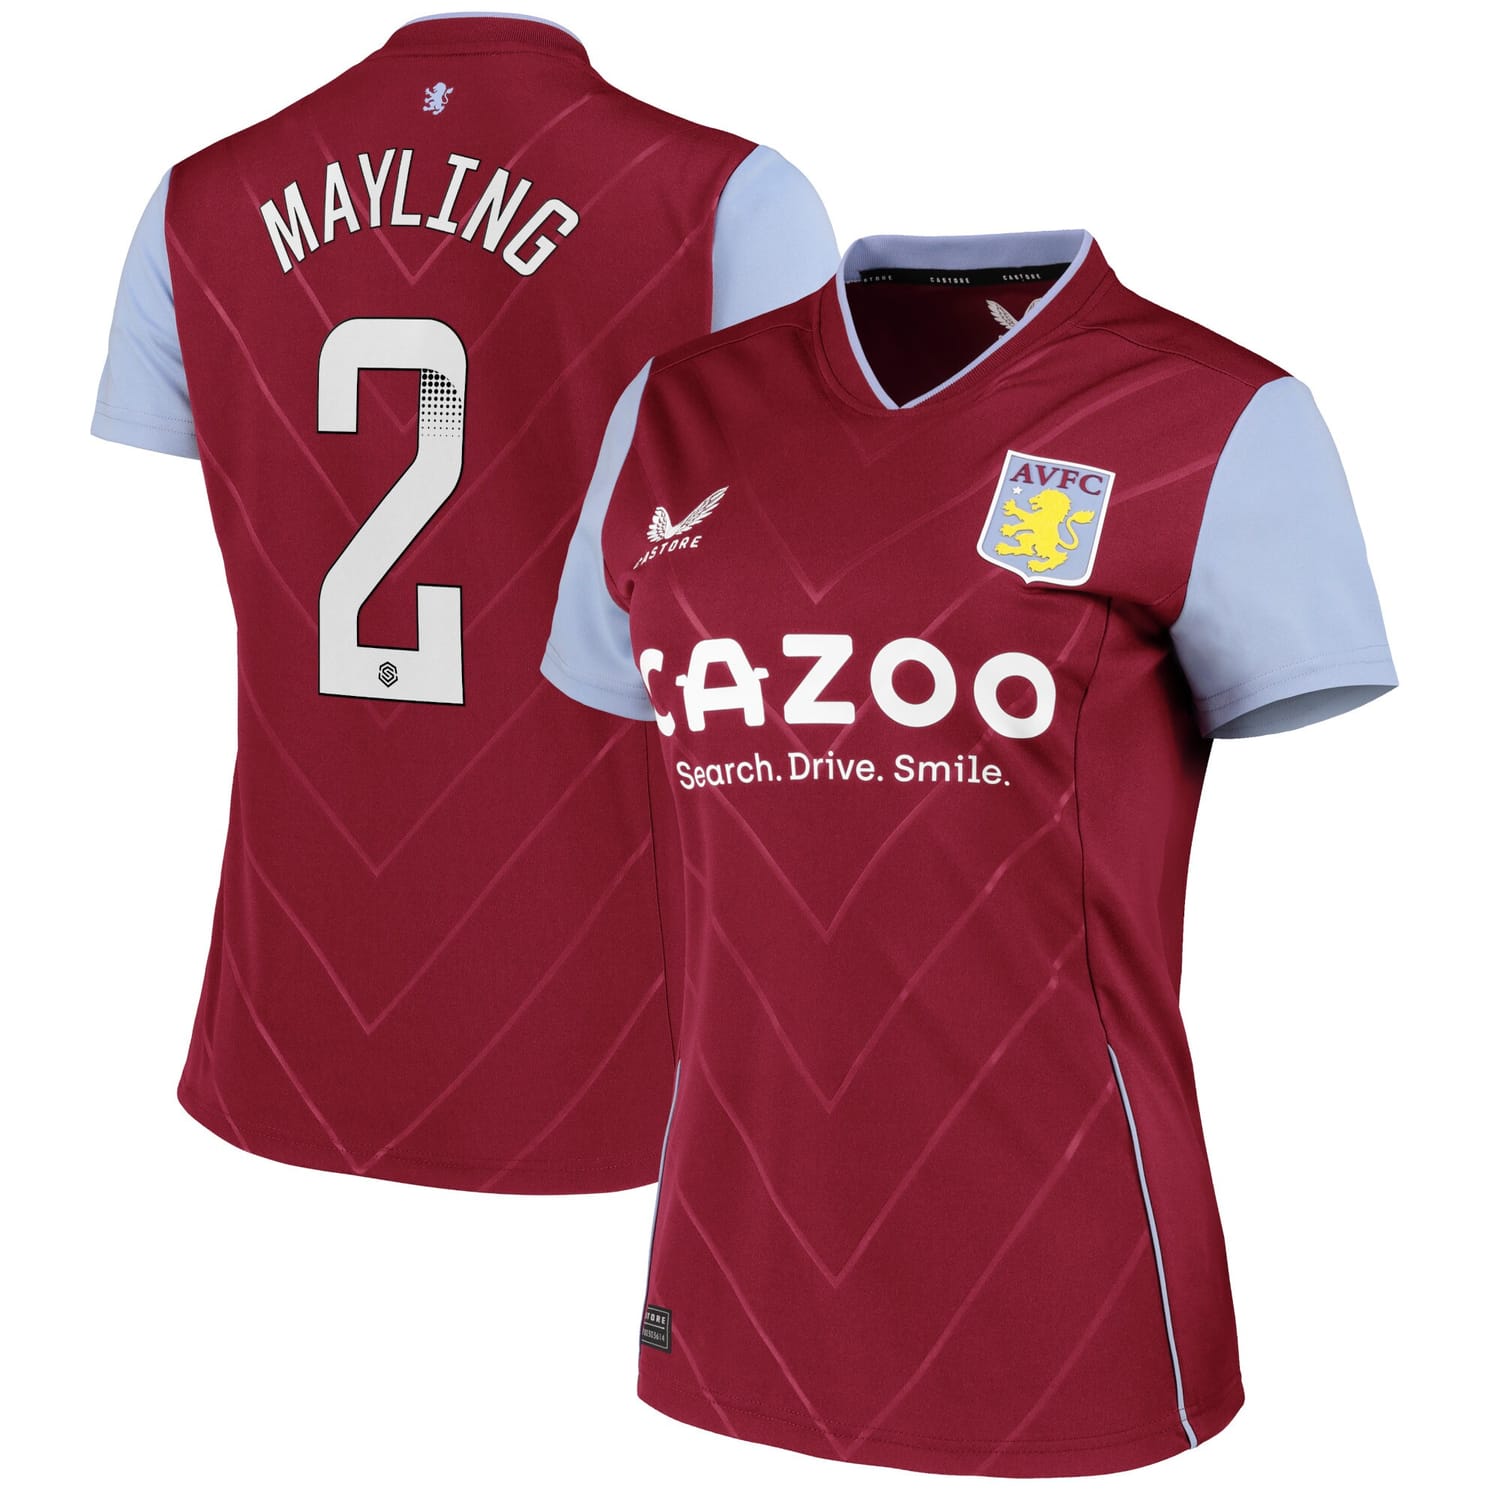 Premier League Aston Villa Home WSL Jersey Shirt 2022-23 player Sarah Mayling 2 printing for Women